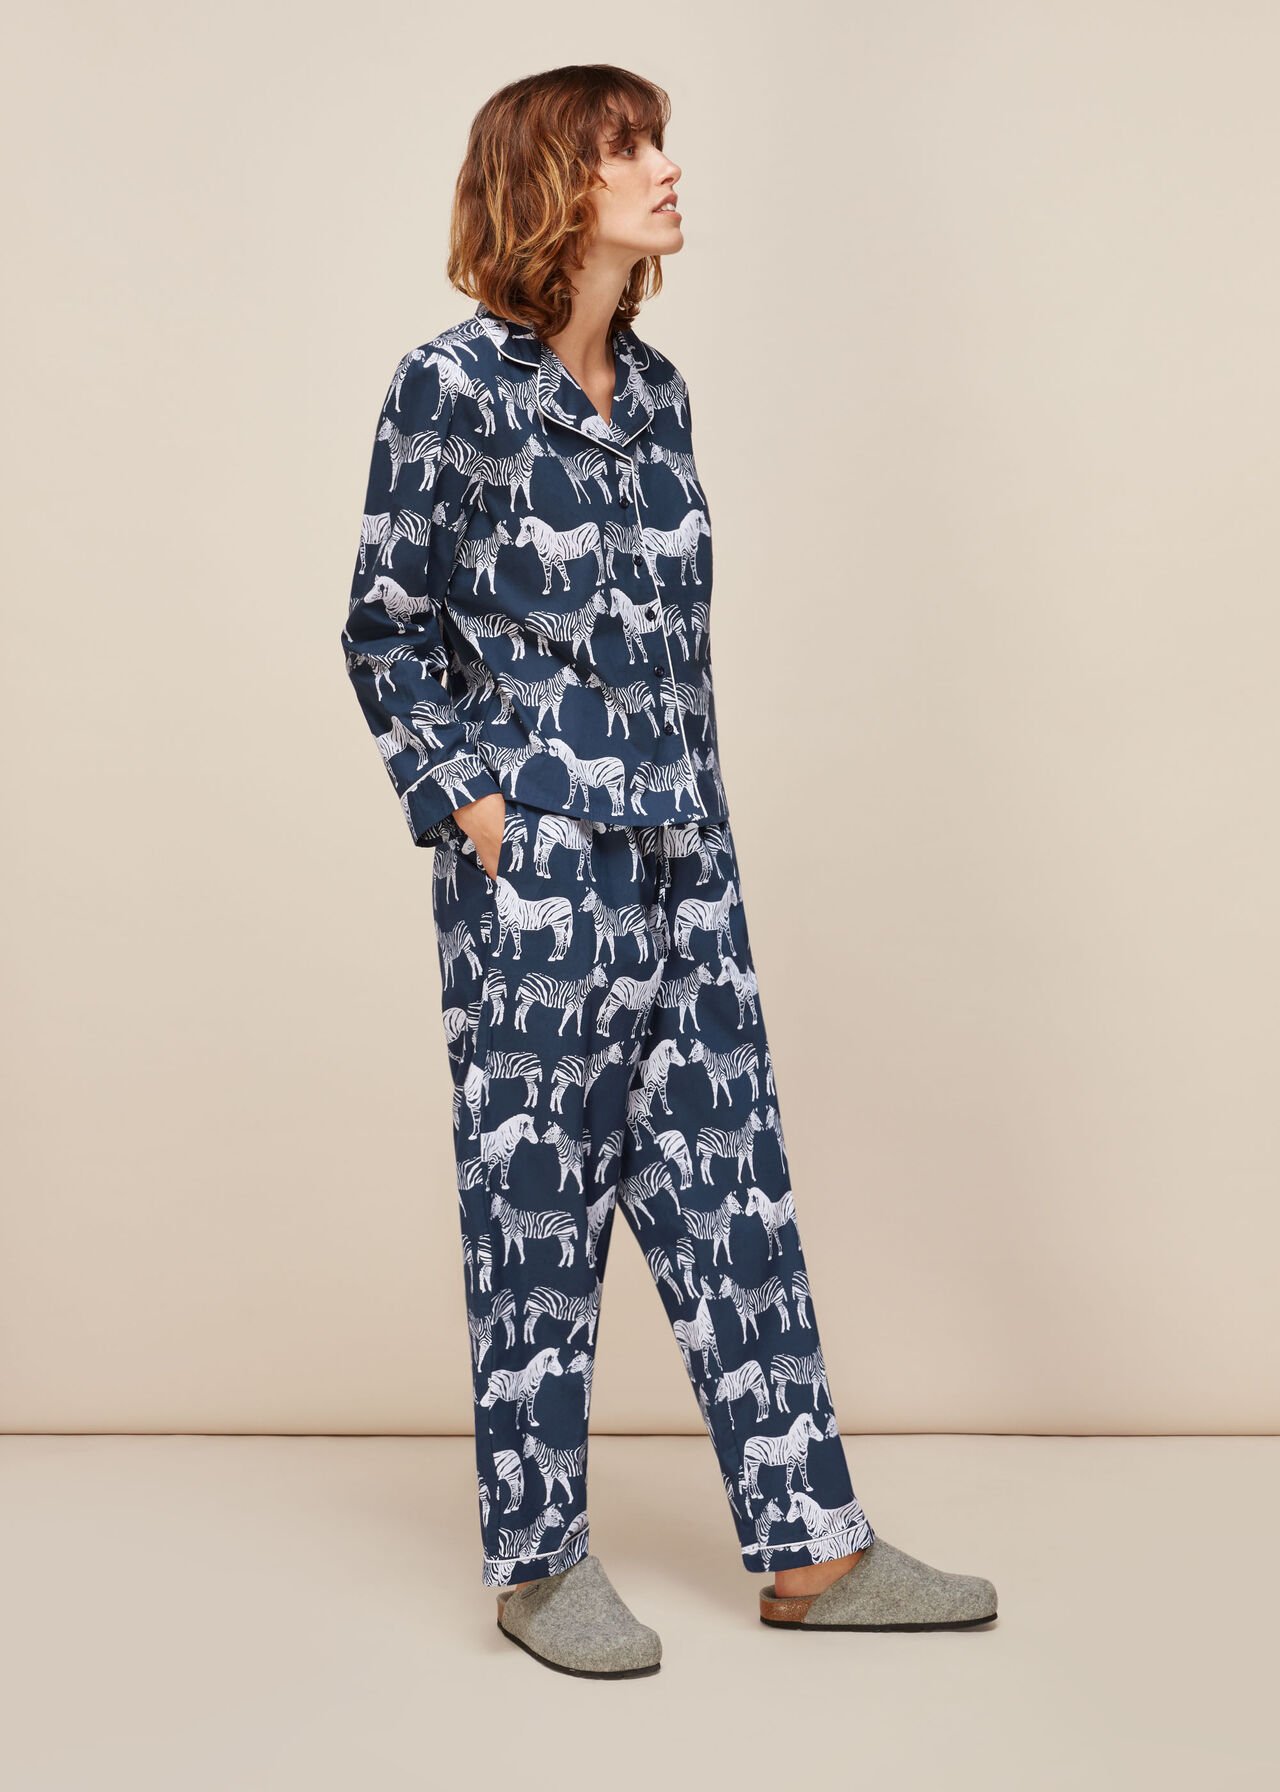 Toevallig schild leiderschap Navy/Multi Zebra Print Cotton Pyjama Set | WHISTLES 